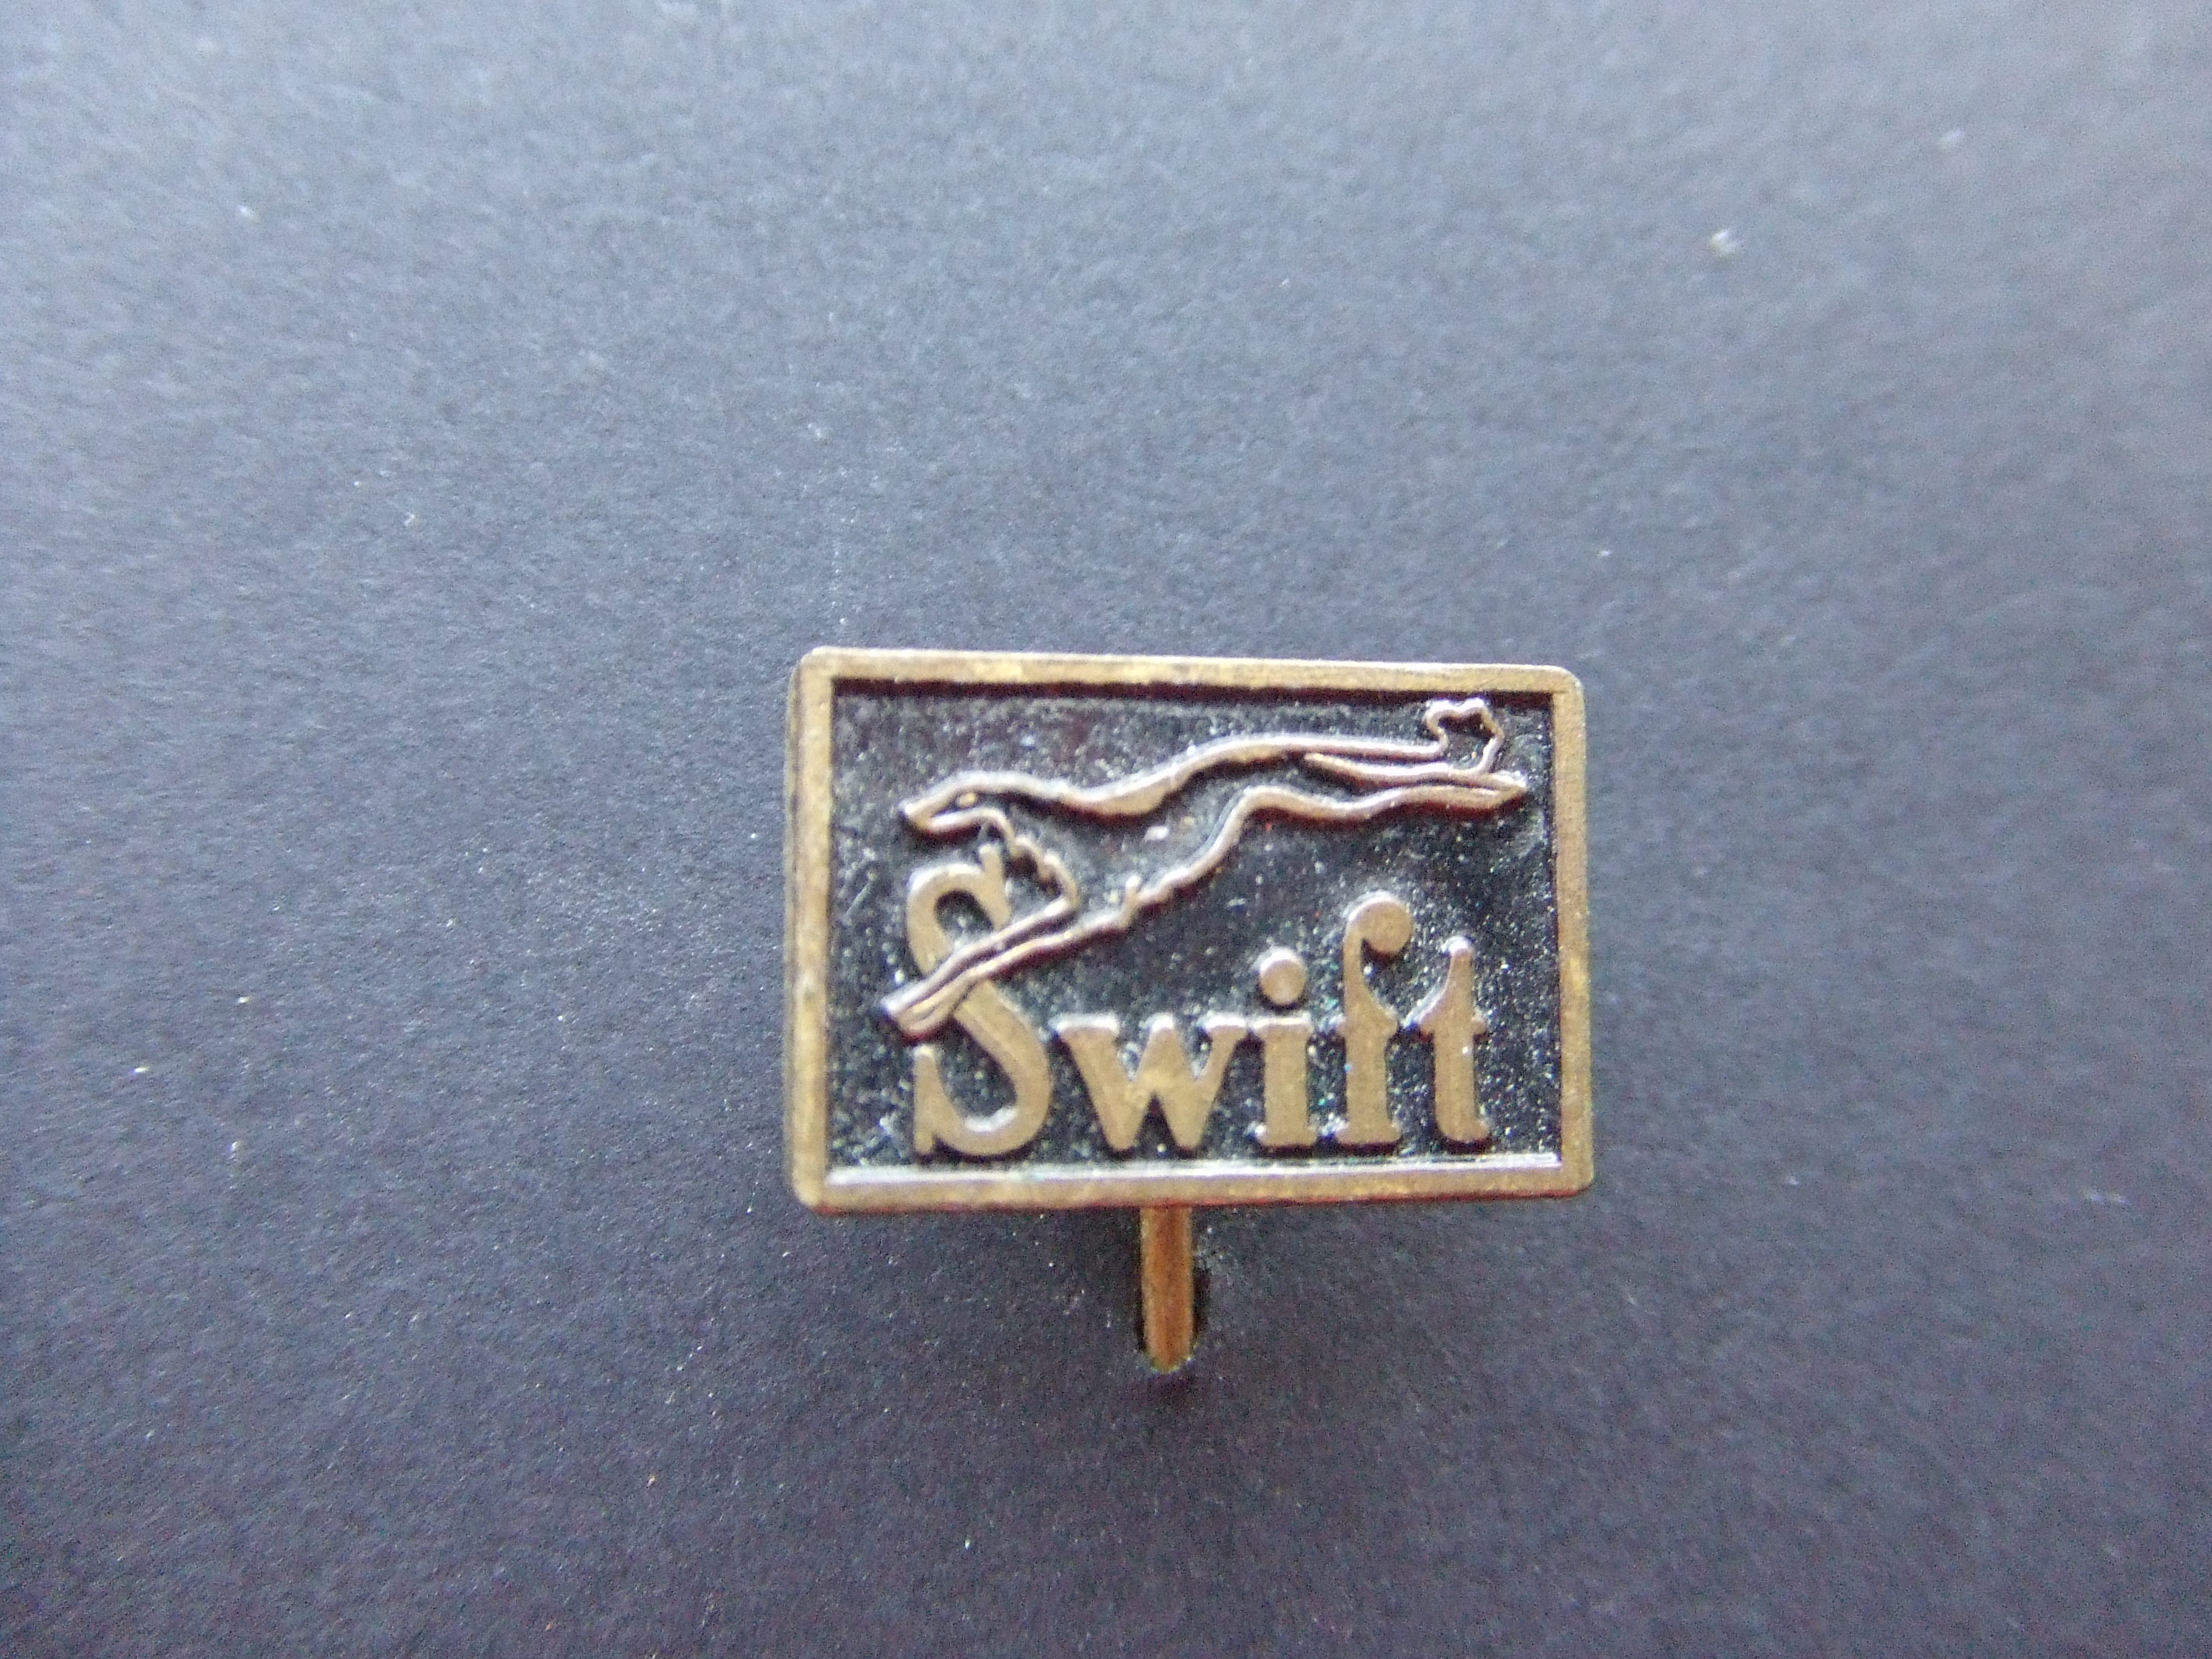 Schoenfabriek  Swift Nijmegen logo jachthond